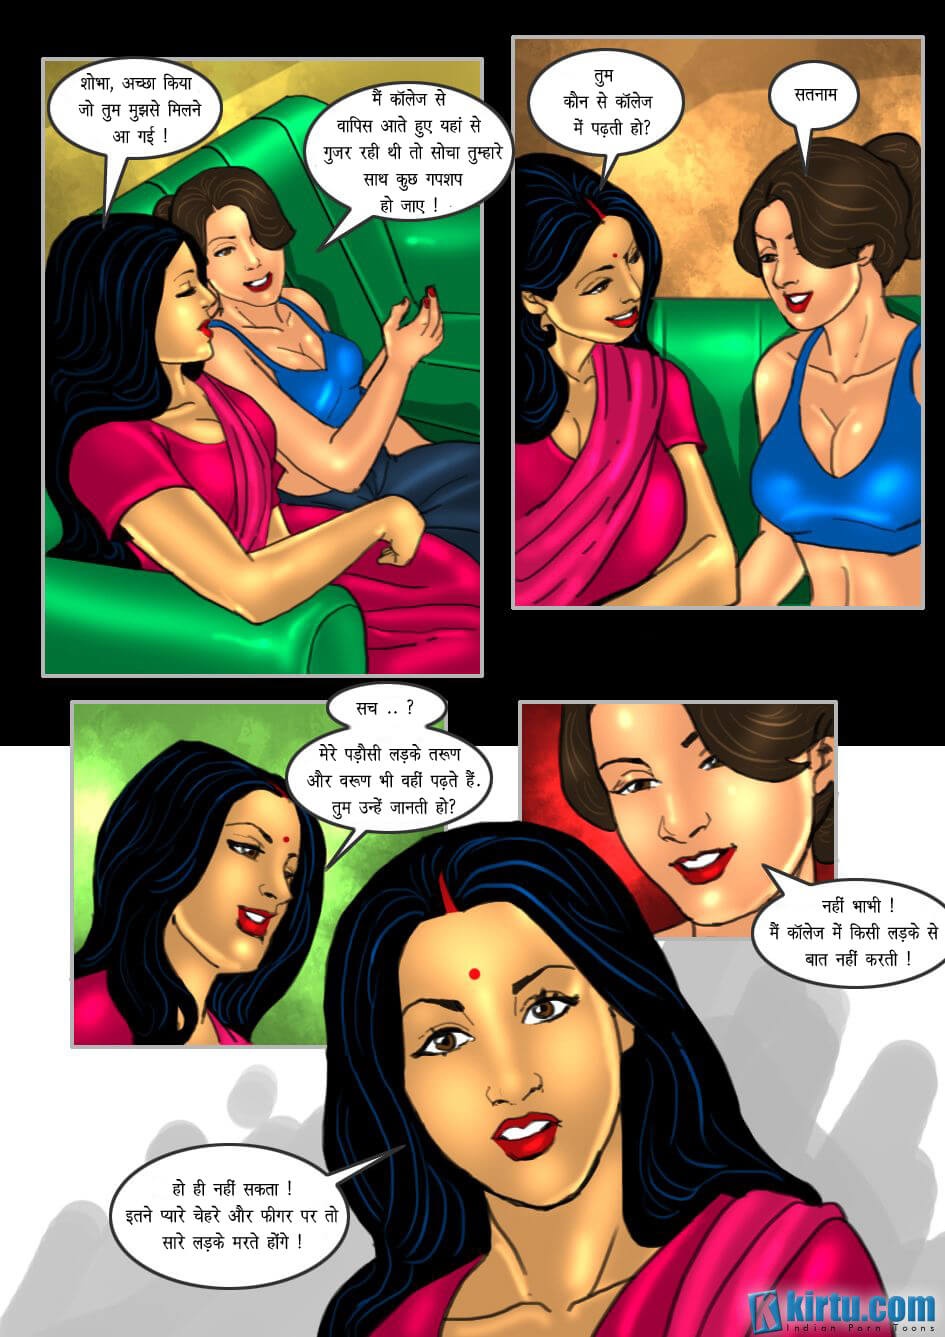 Savita bhabhi comics in hindi